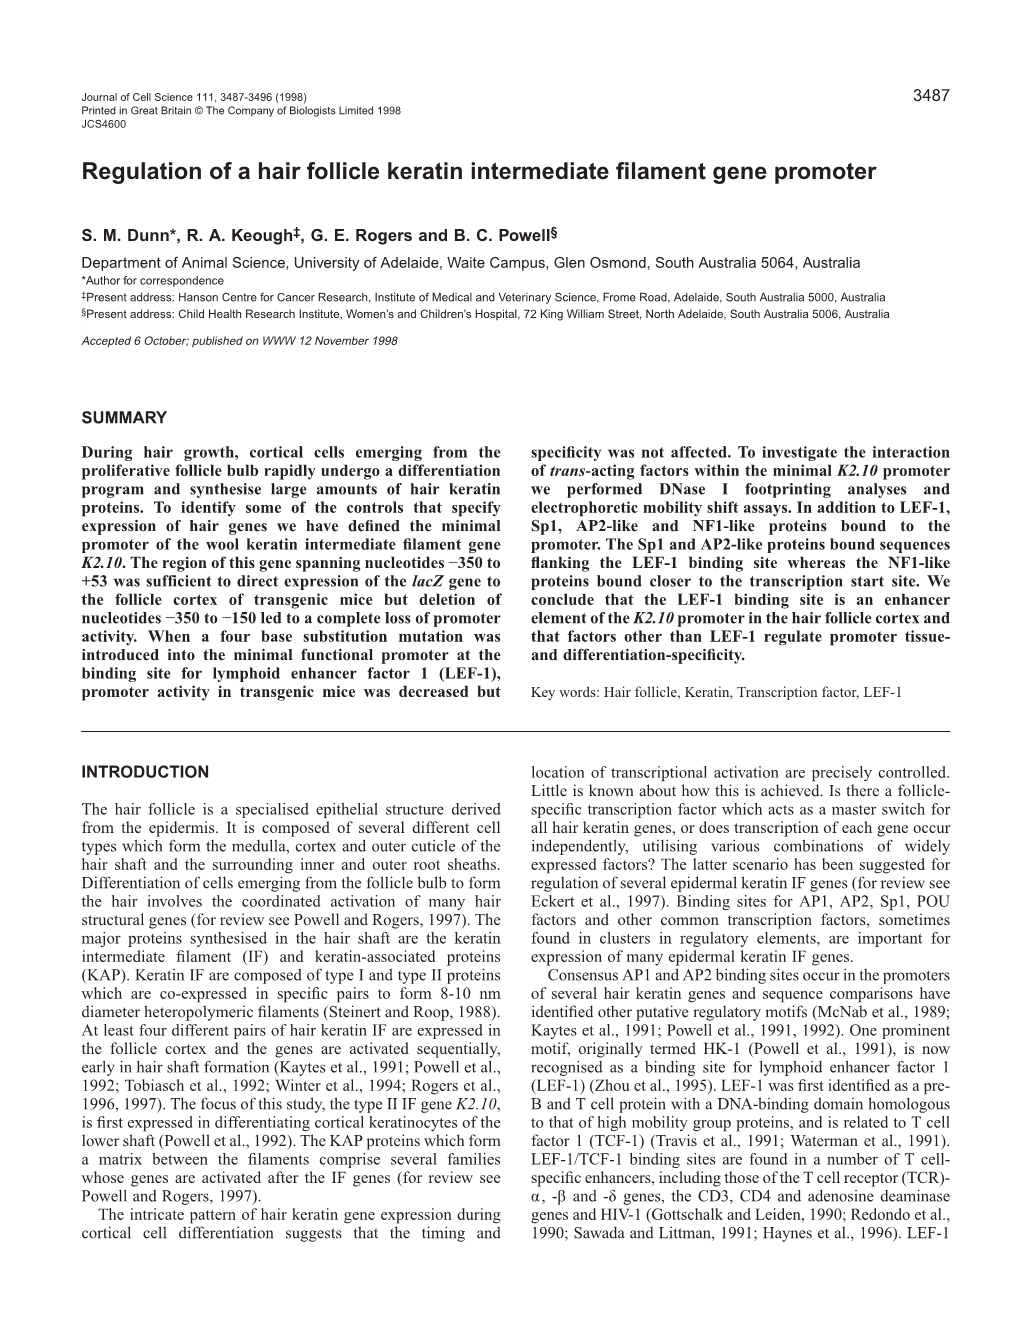 Regulation of a Hair Follicle Keratin Intermediate Filament Gene Promoter